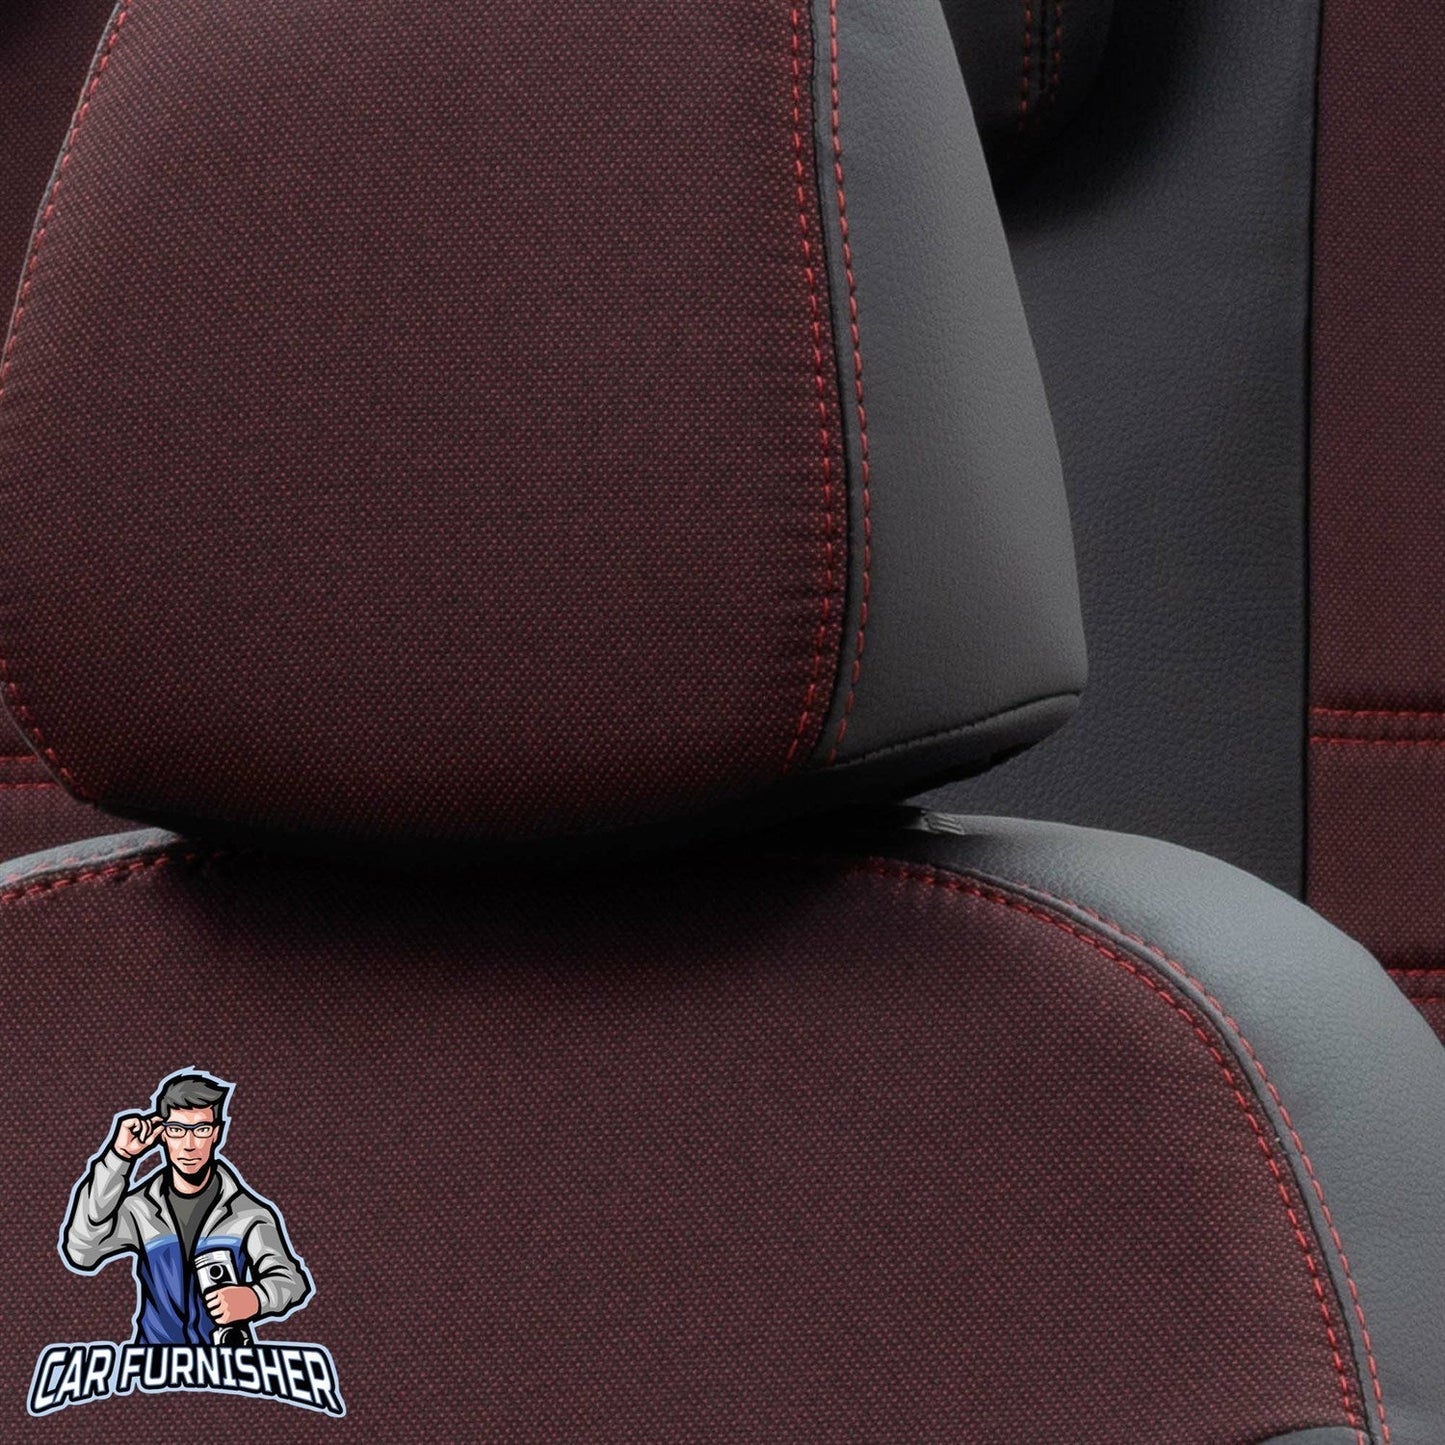 Dacia Dokker Seat Covers Paris Leather & Jacquard Design Red Leather & Jacquard Fabric